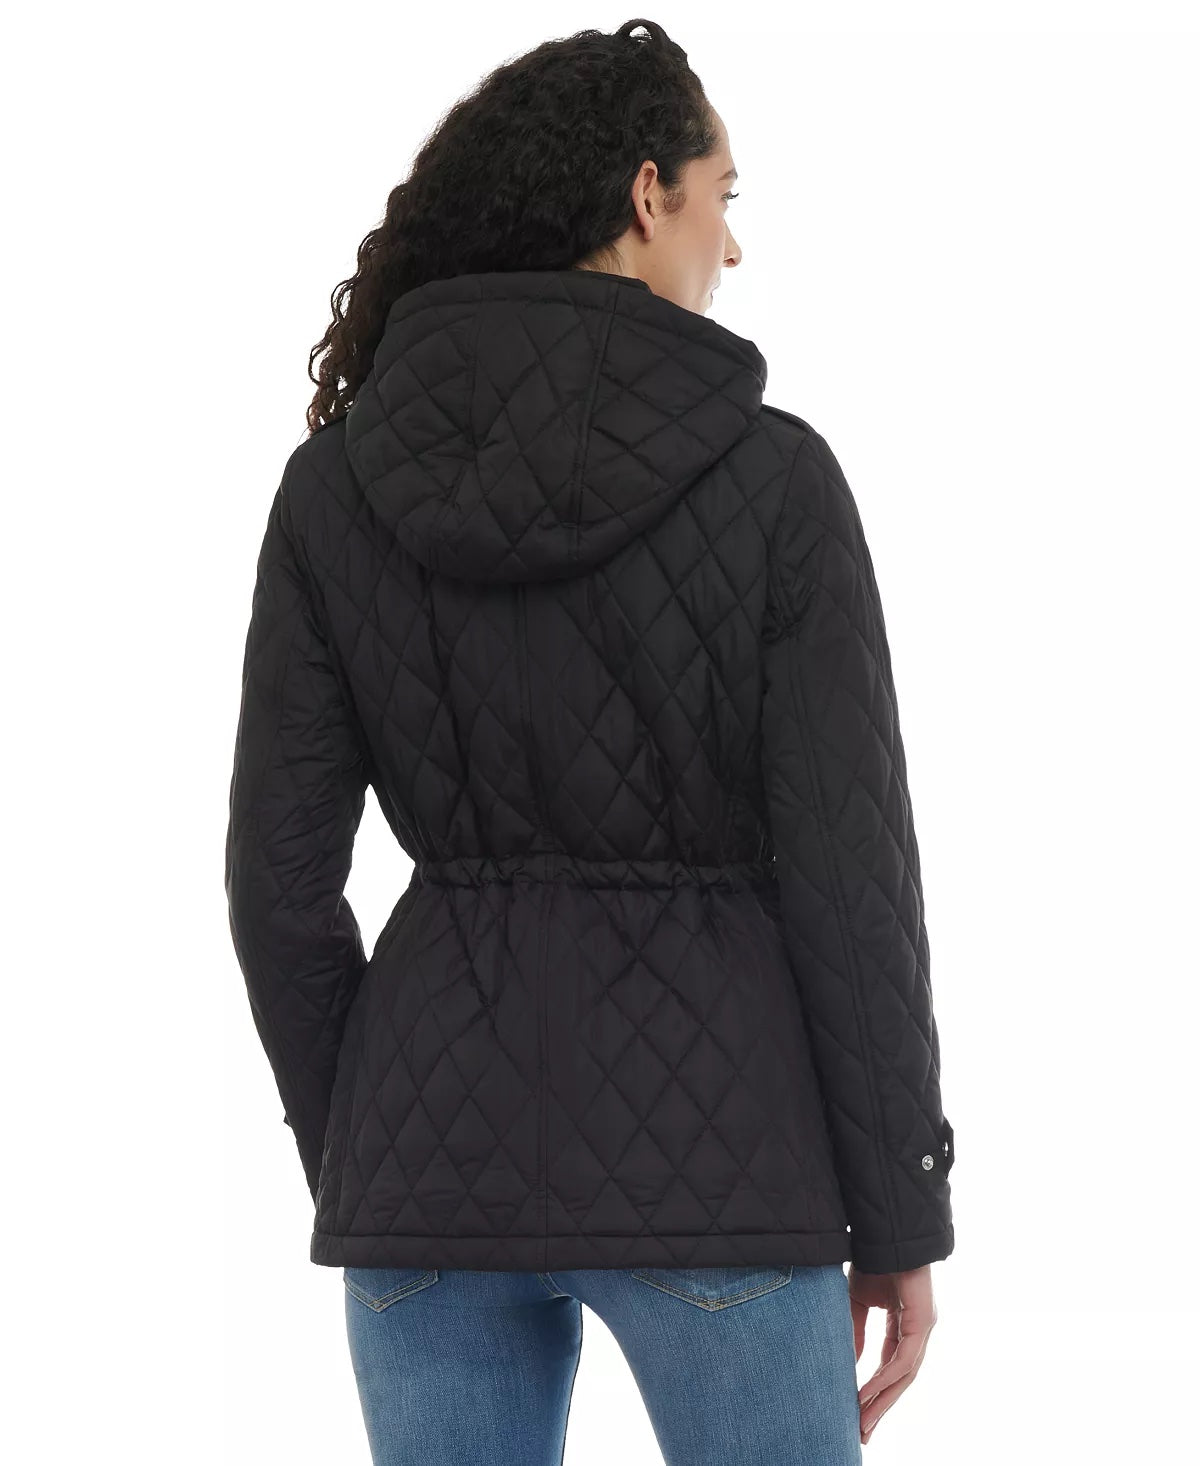 Michael Kors Women's Quilted Hooded Anorak Coat 2X Black